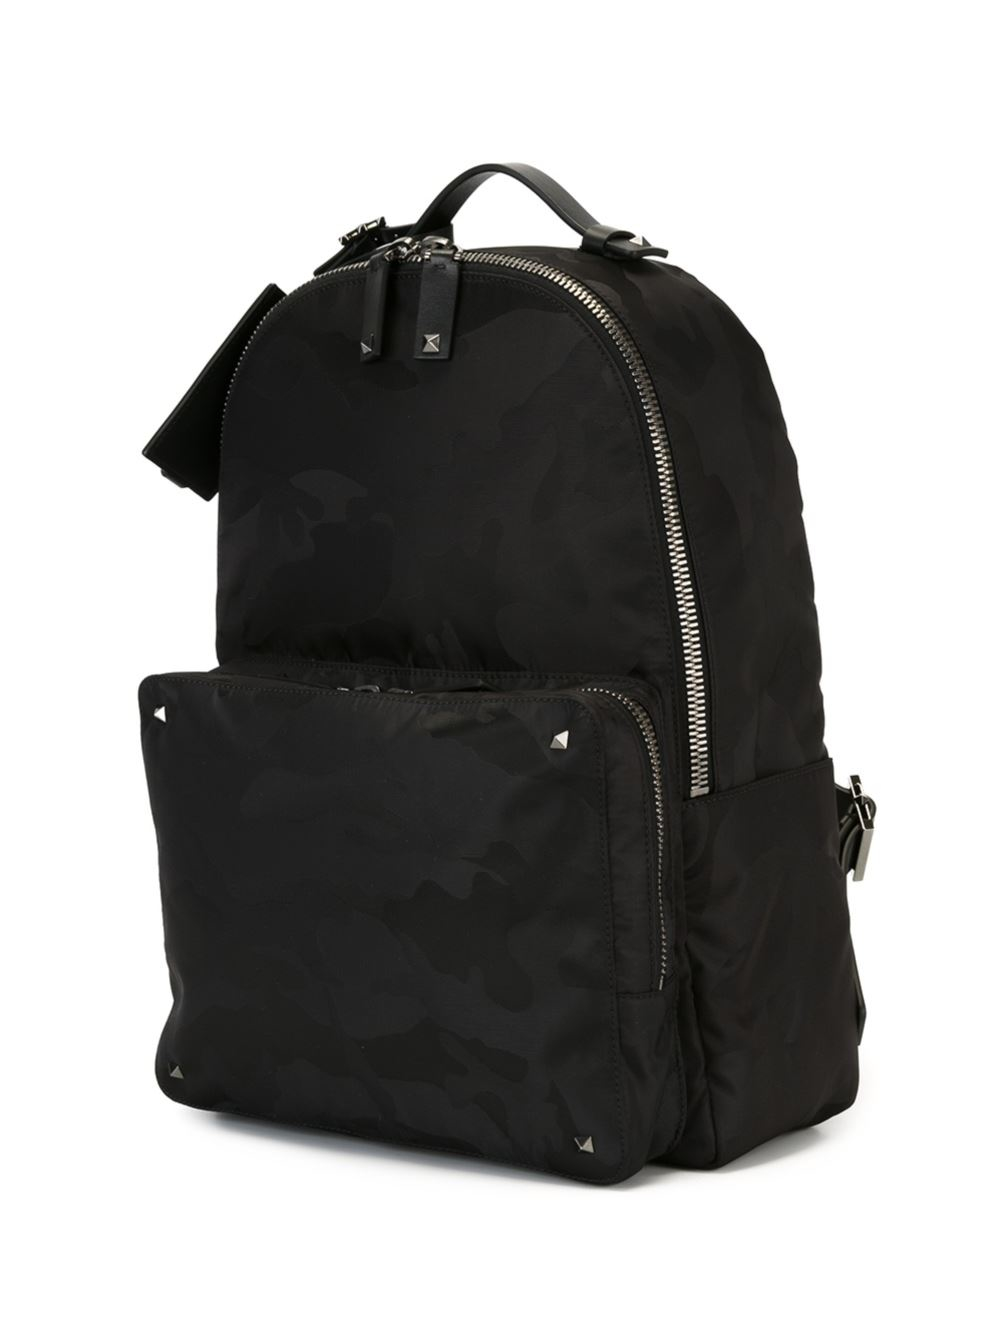 Lyst - Valentino Garavani 'rockstud' Backpack in Black for Men